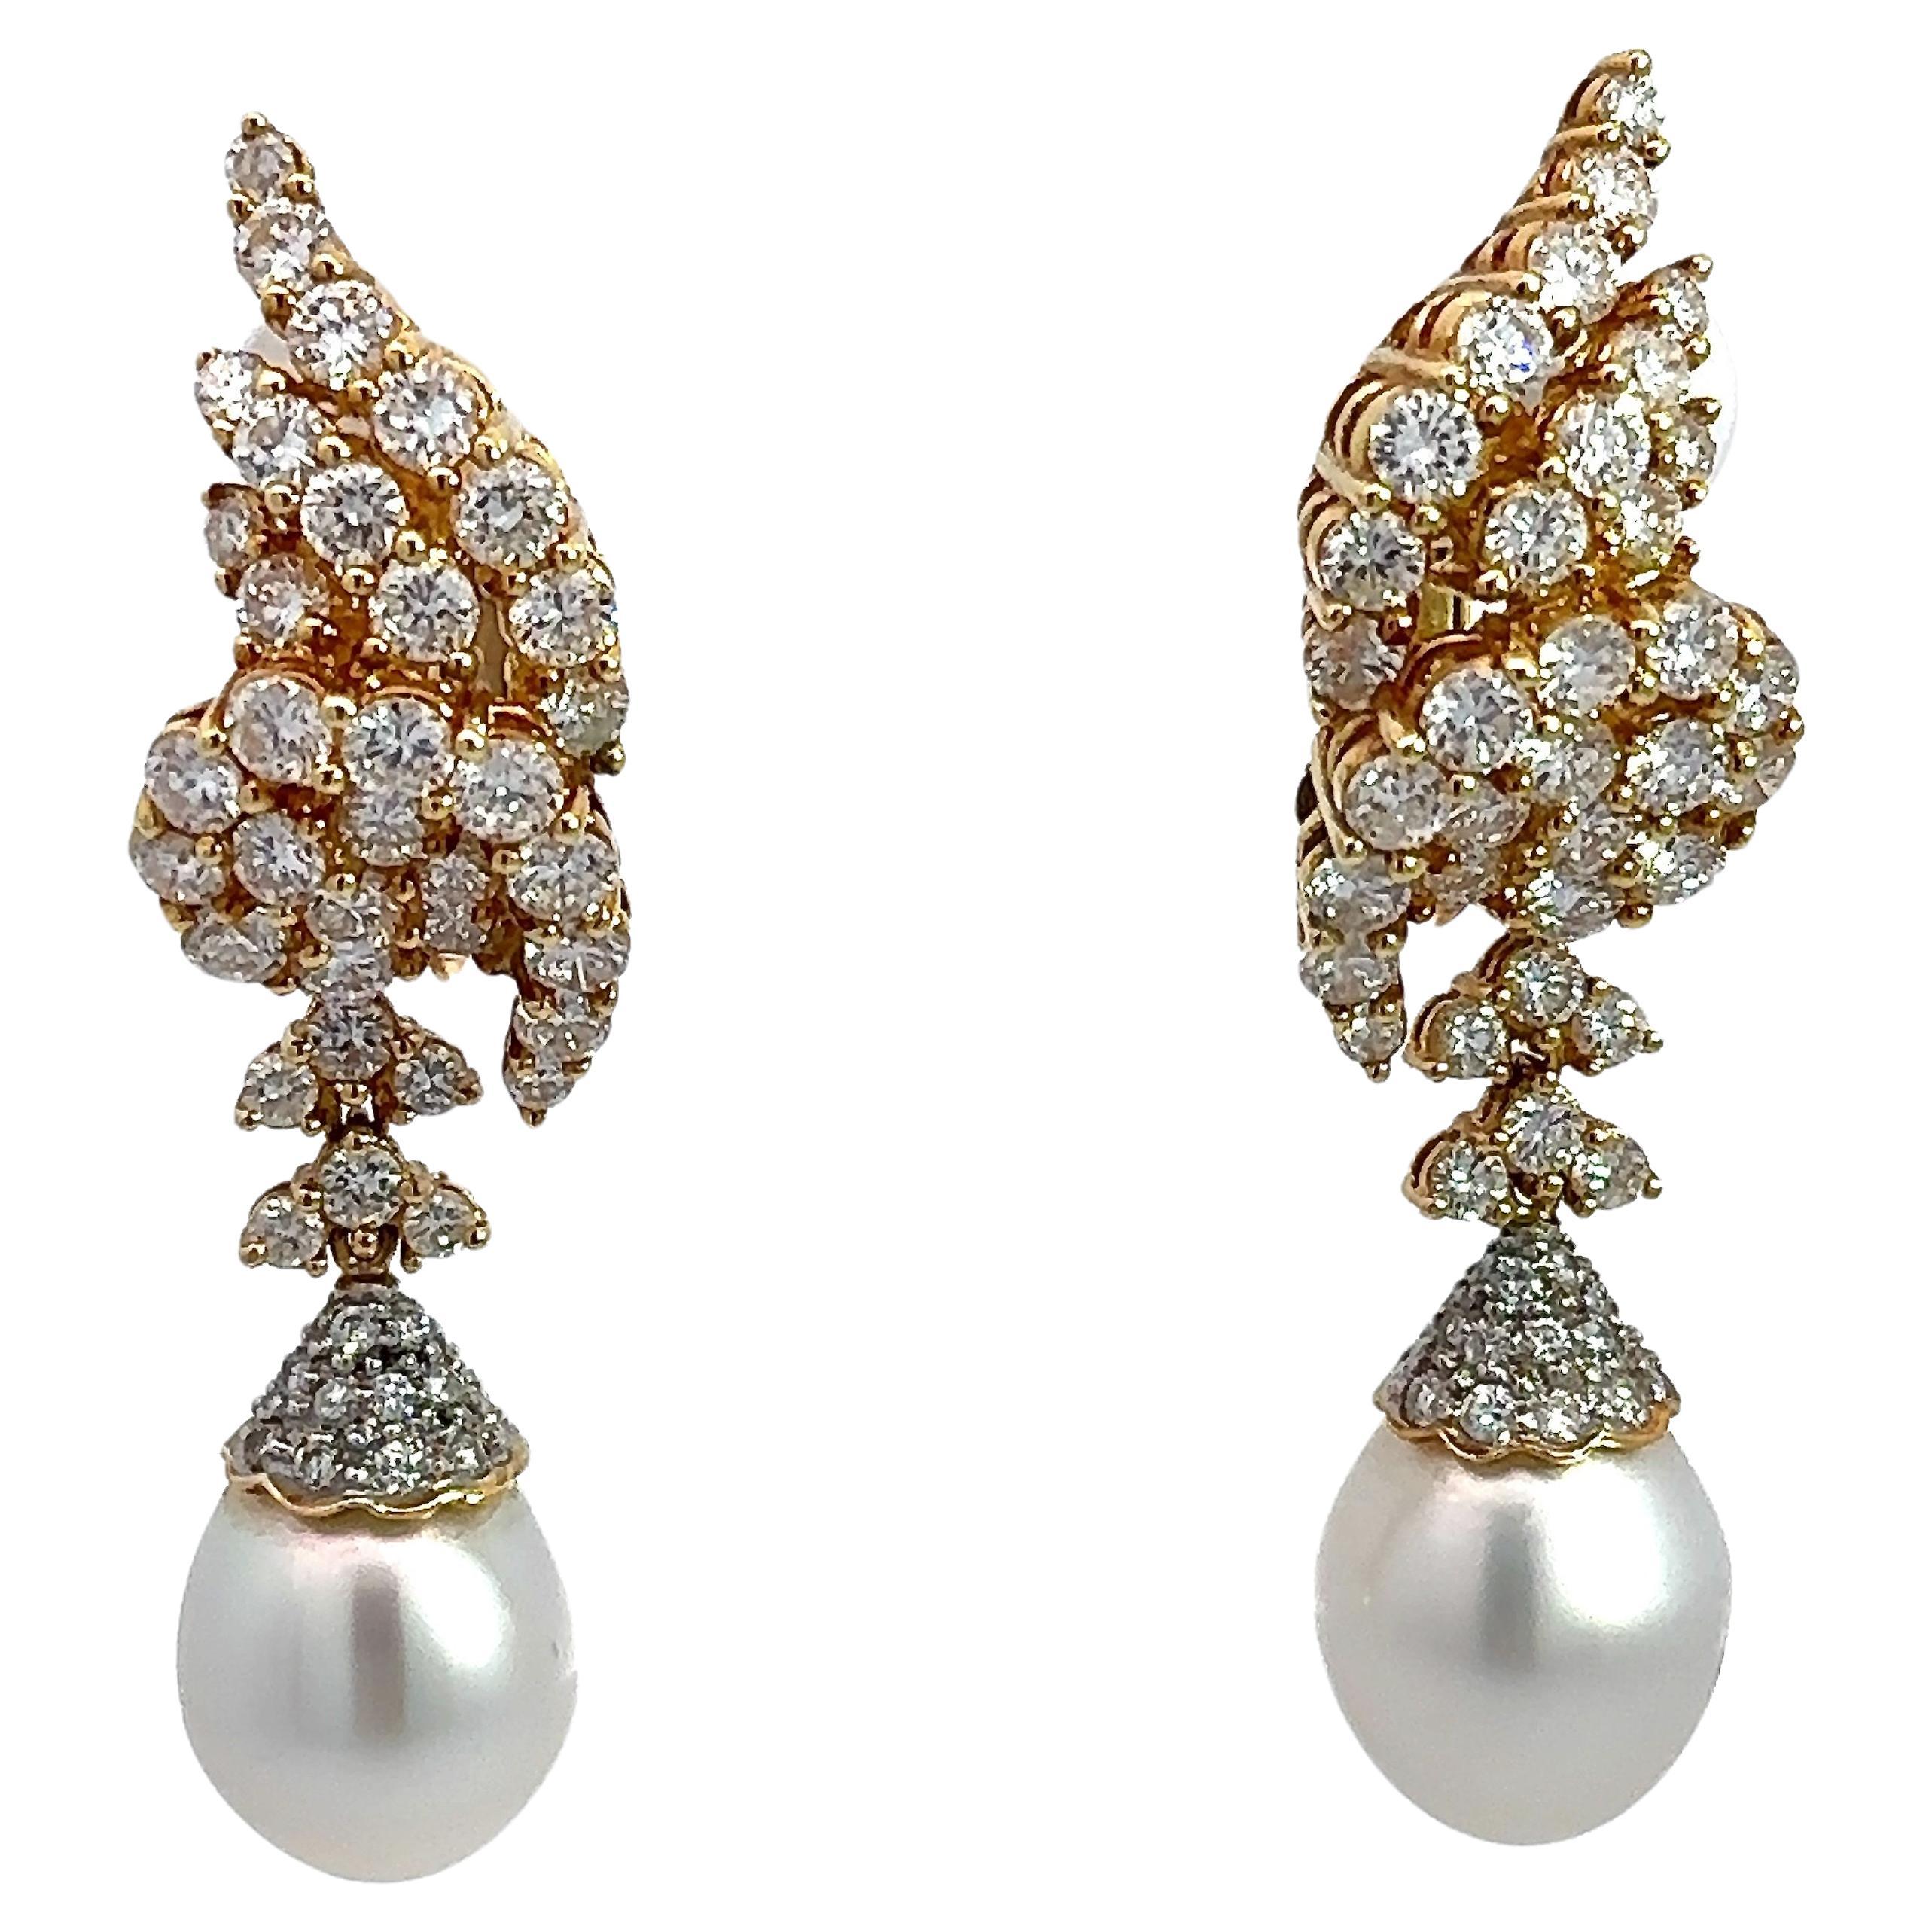 7CT Diamond and South Sea Pearl Dangle Earrings 